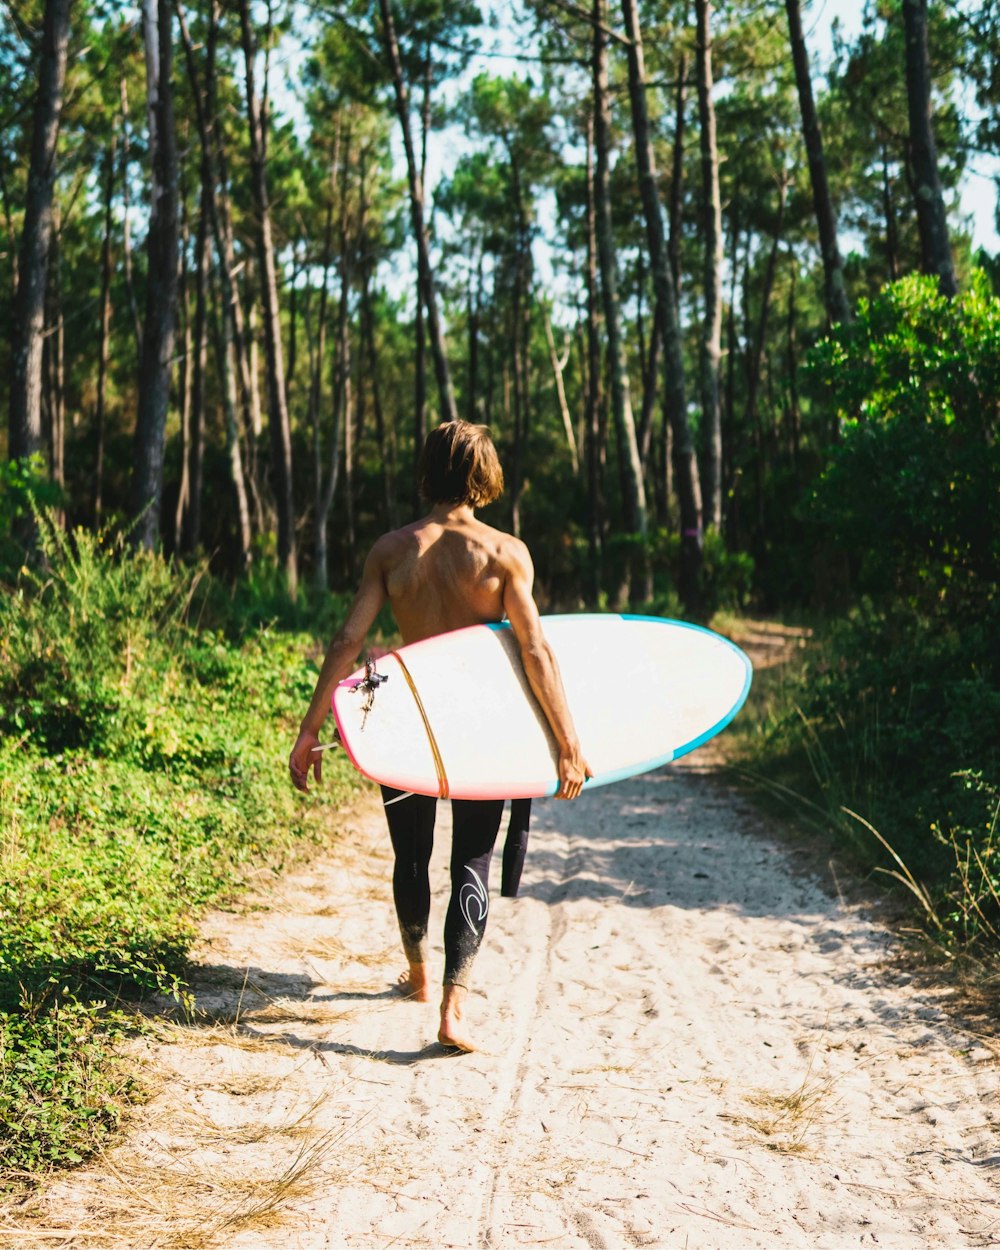 mulher no biquíni preto e branco segurando a prancha de surf branca andando na estrada de terra durante o dia